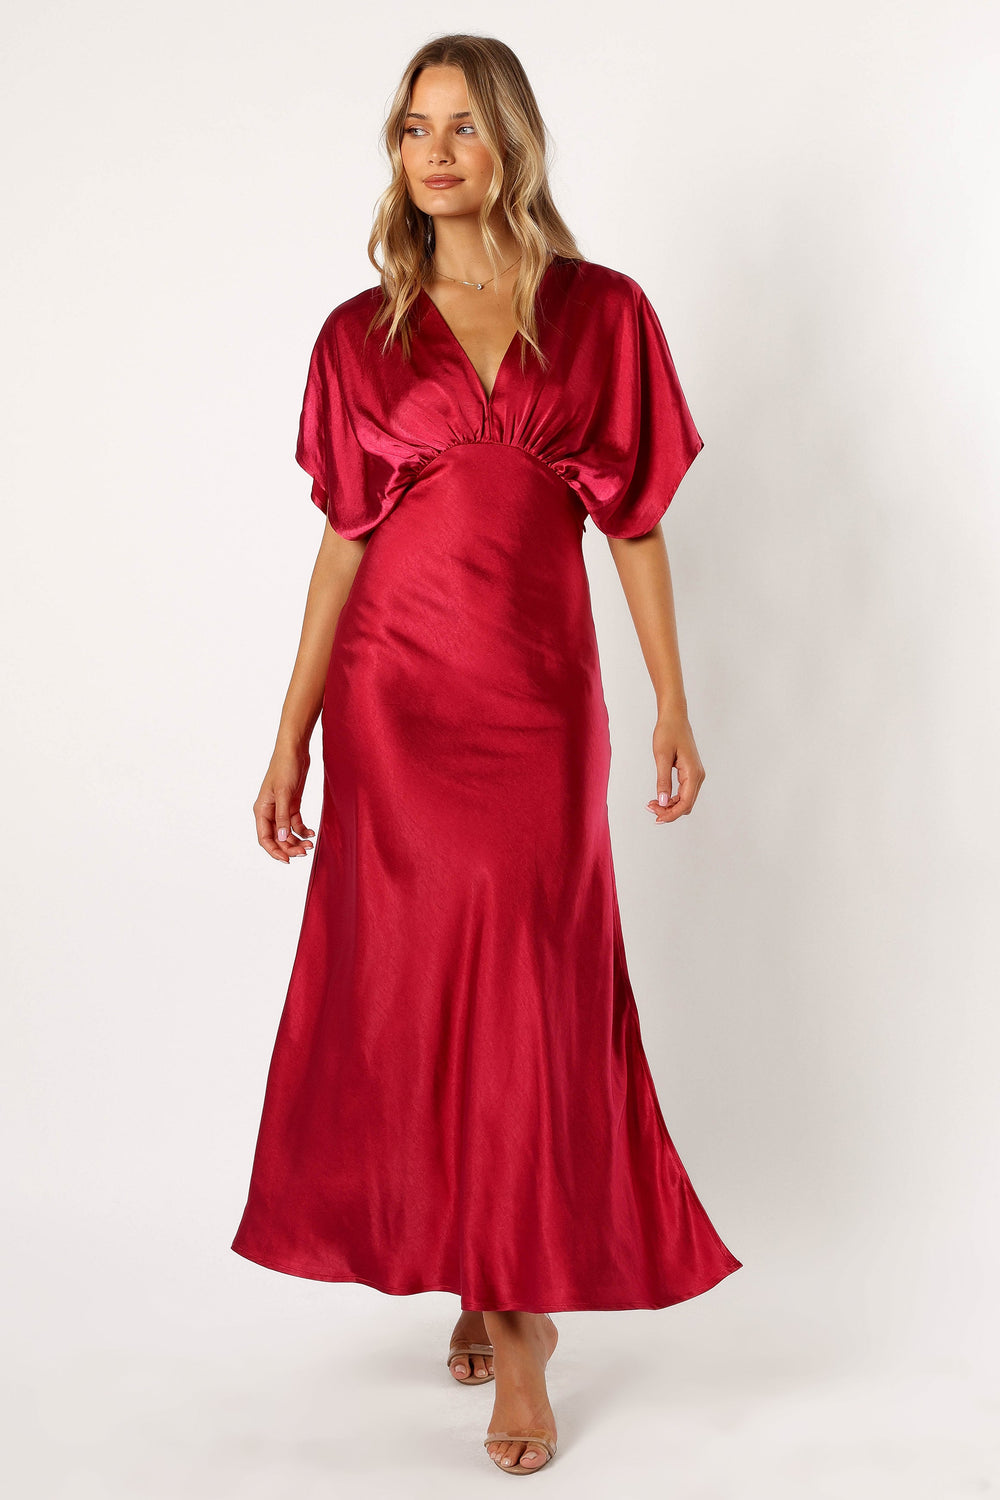 Petal and Pup USA DRESSES Ricki Maxi Dress - Ruby Wine